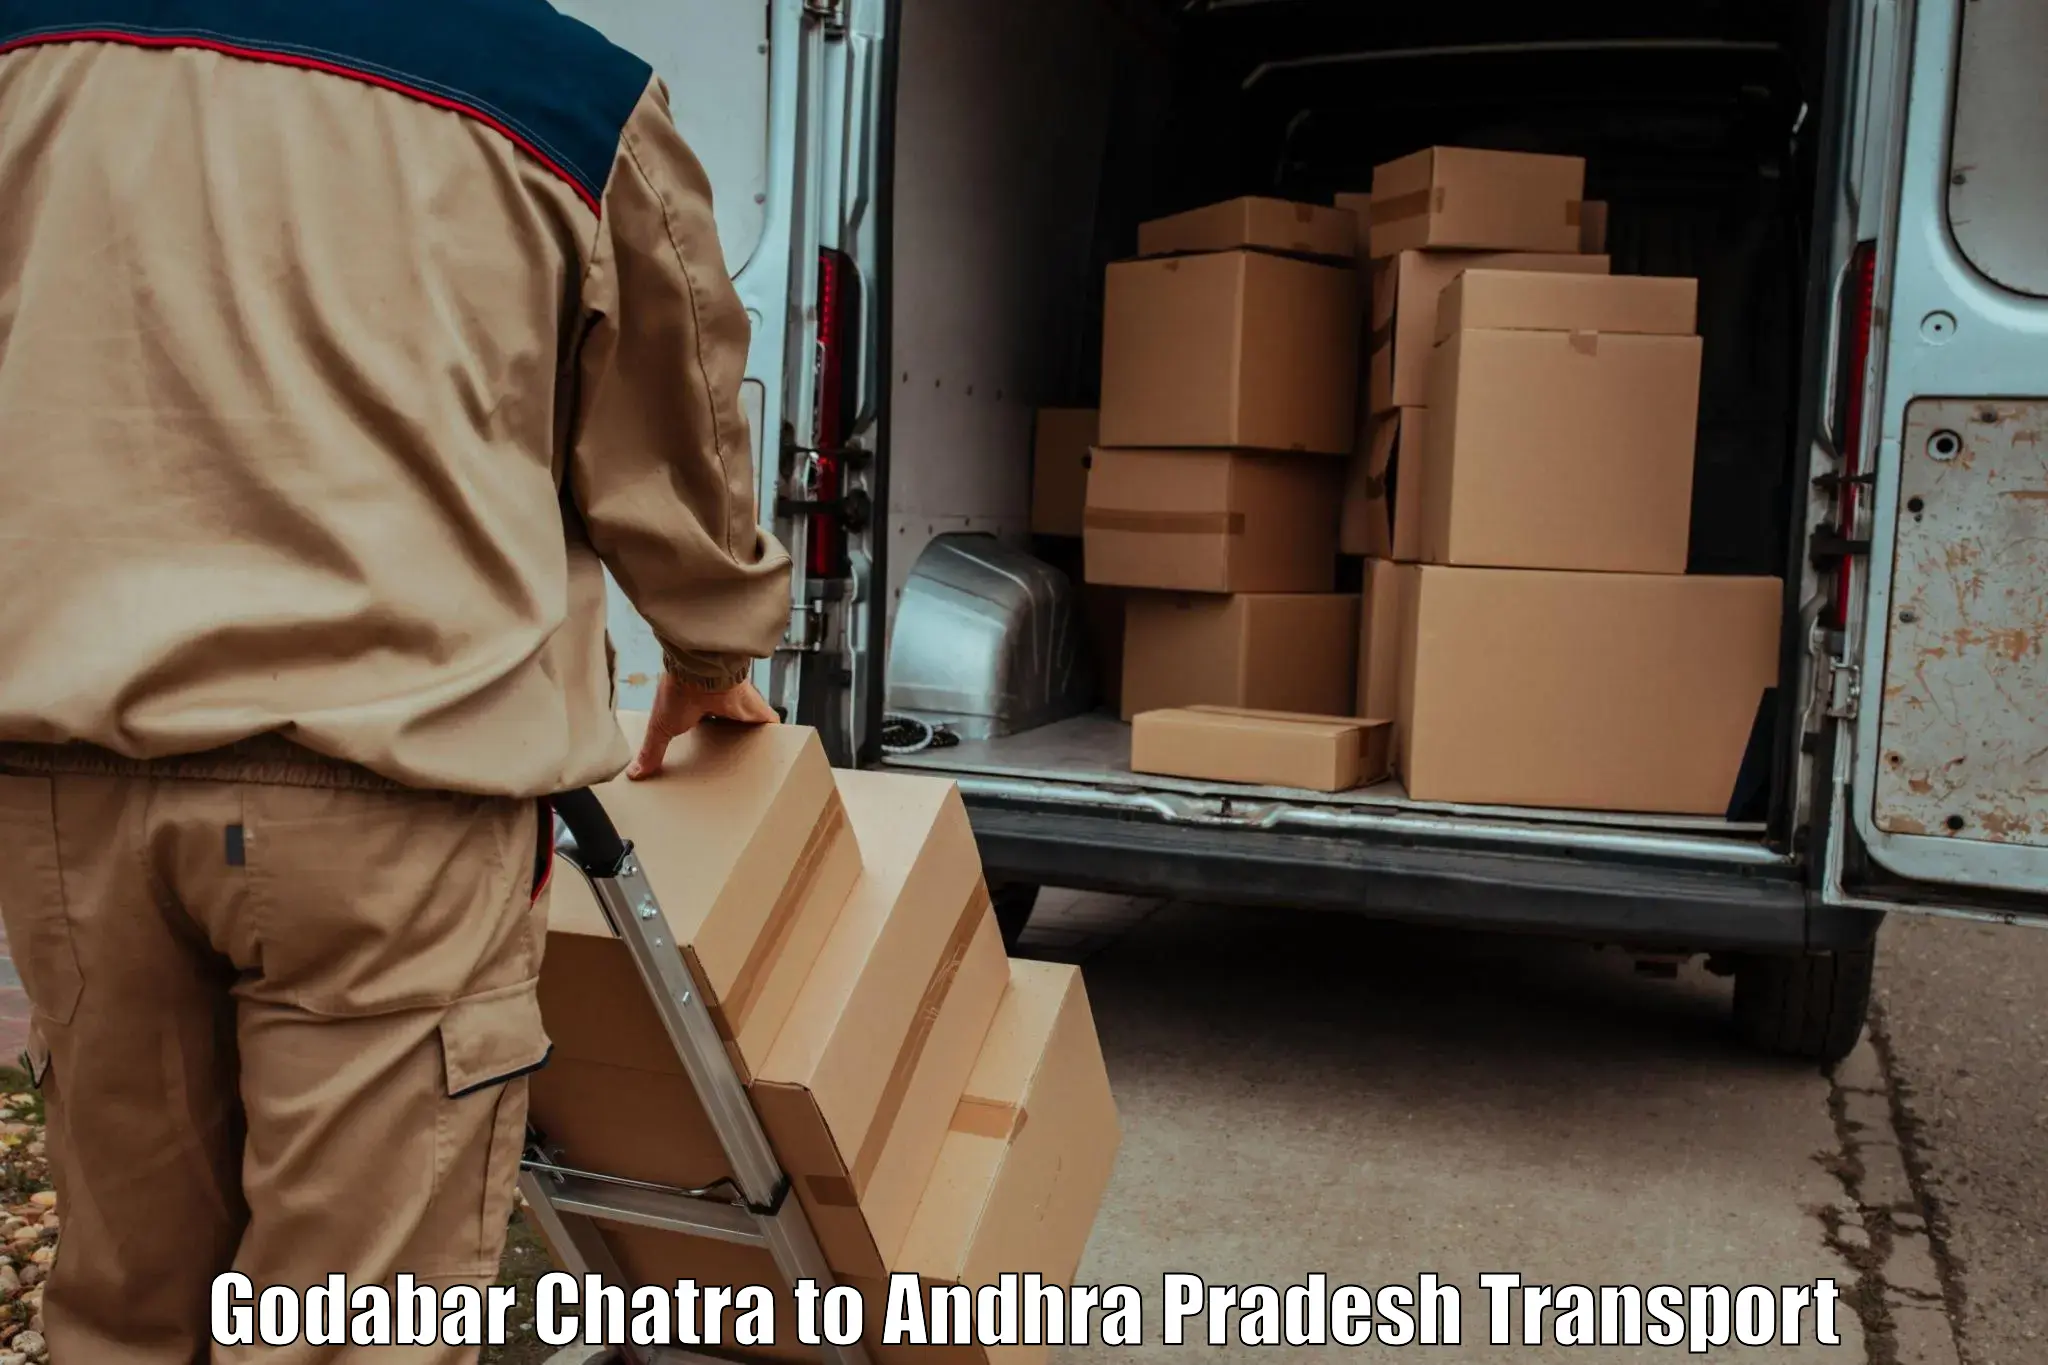 Transport in sharing Godabar Chatra to Chodavaram